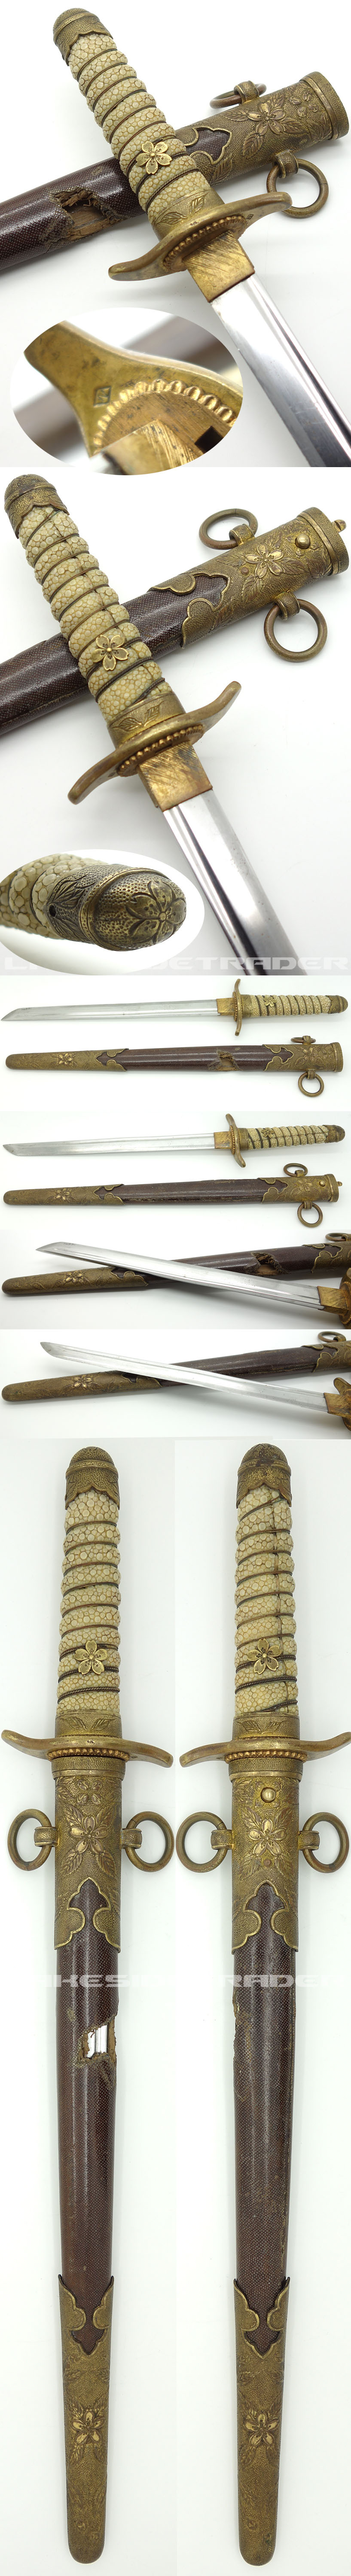 Early Japanese Navy Dagger